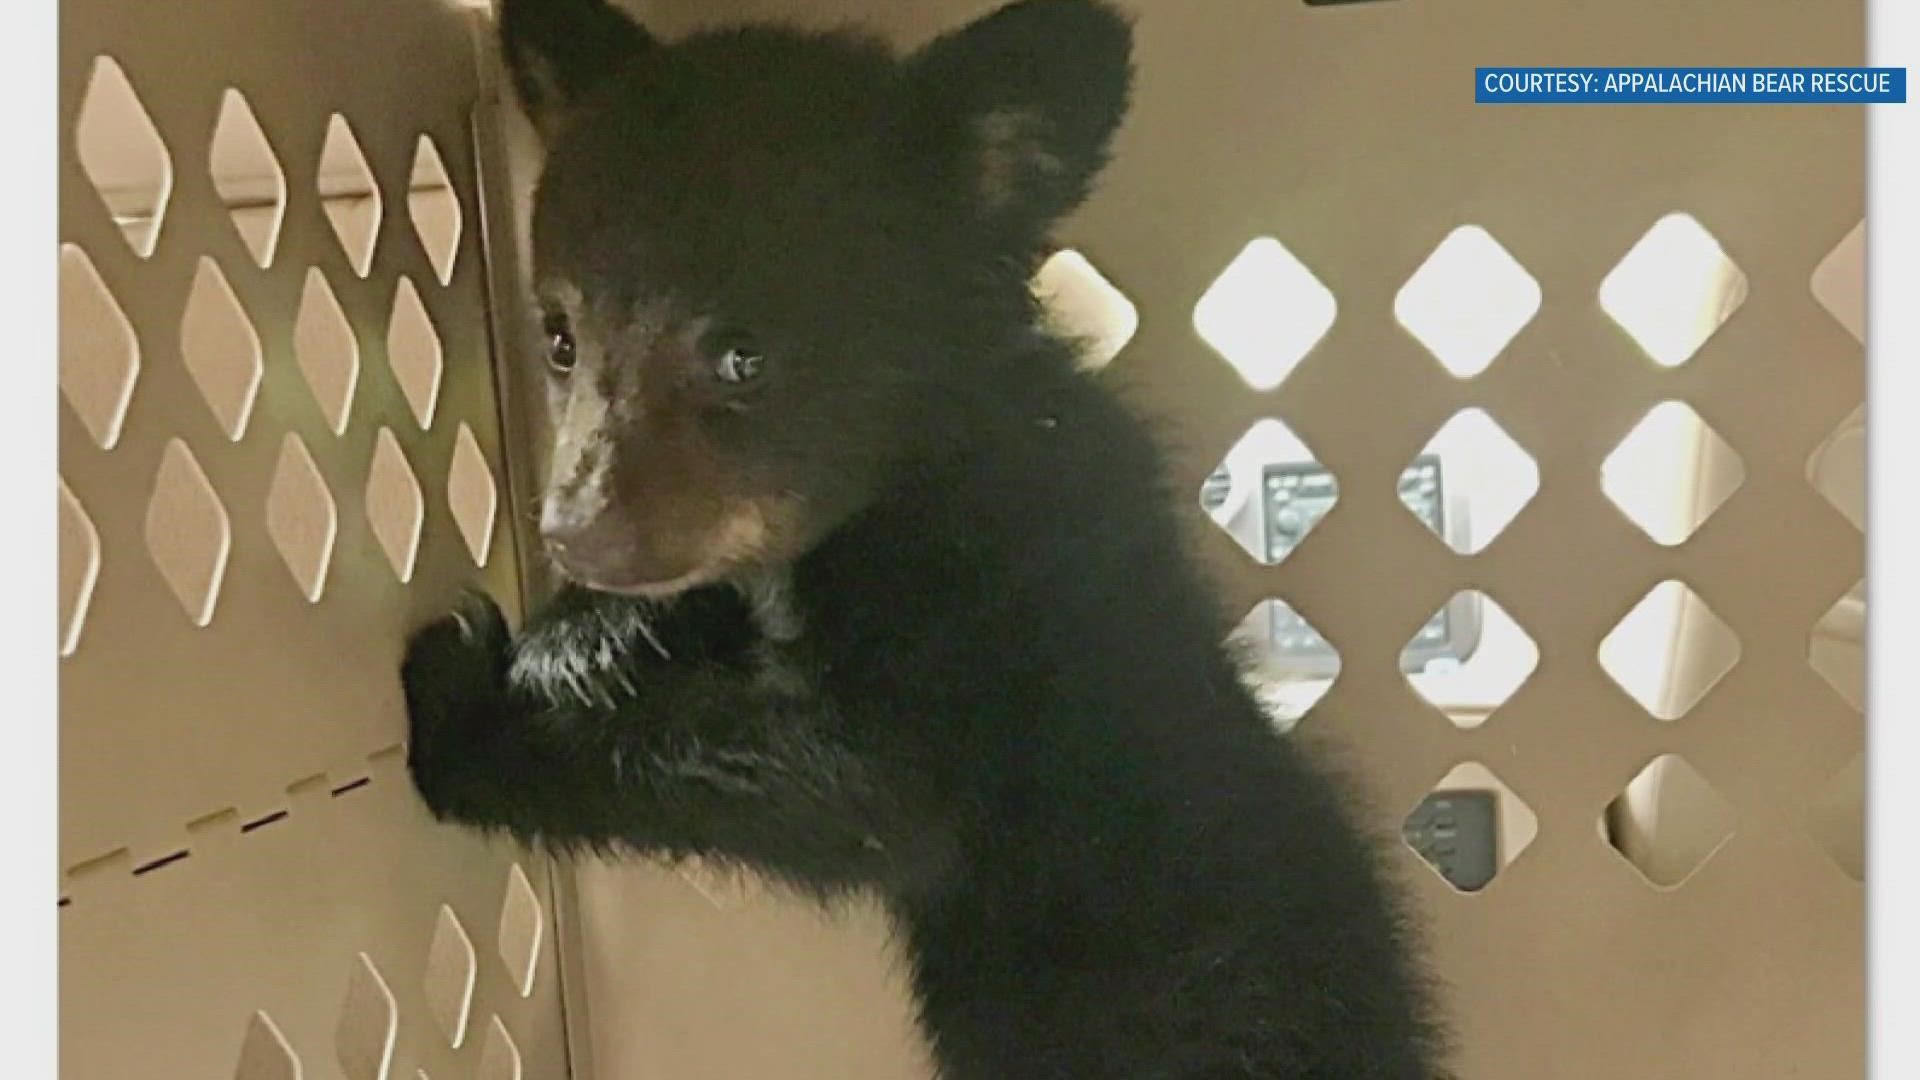 The Appalachian Bear Rescue declared Sunday, Jan. 22 the official birthday for black bears!